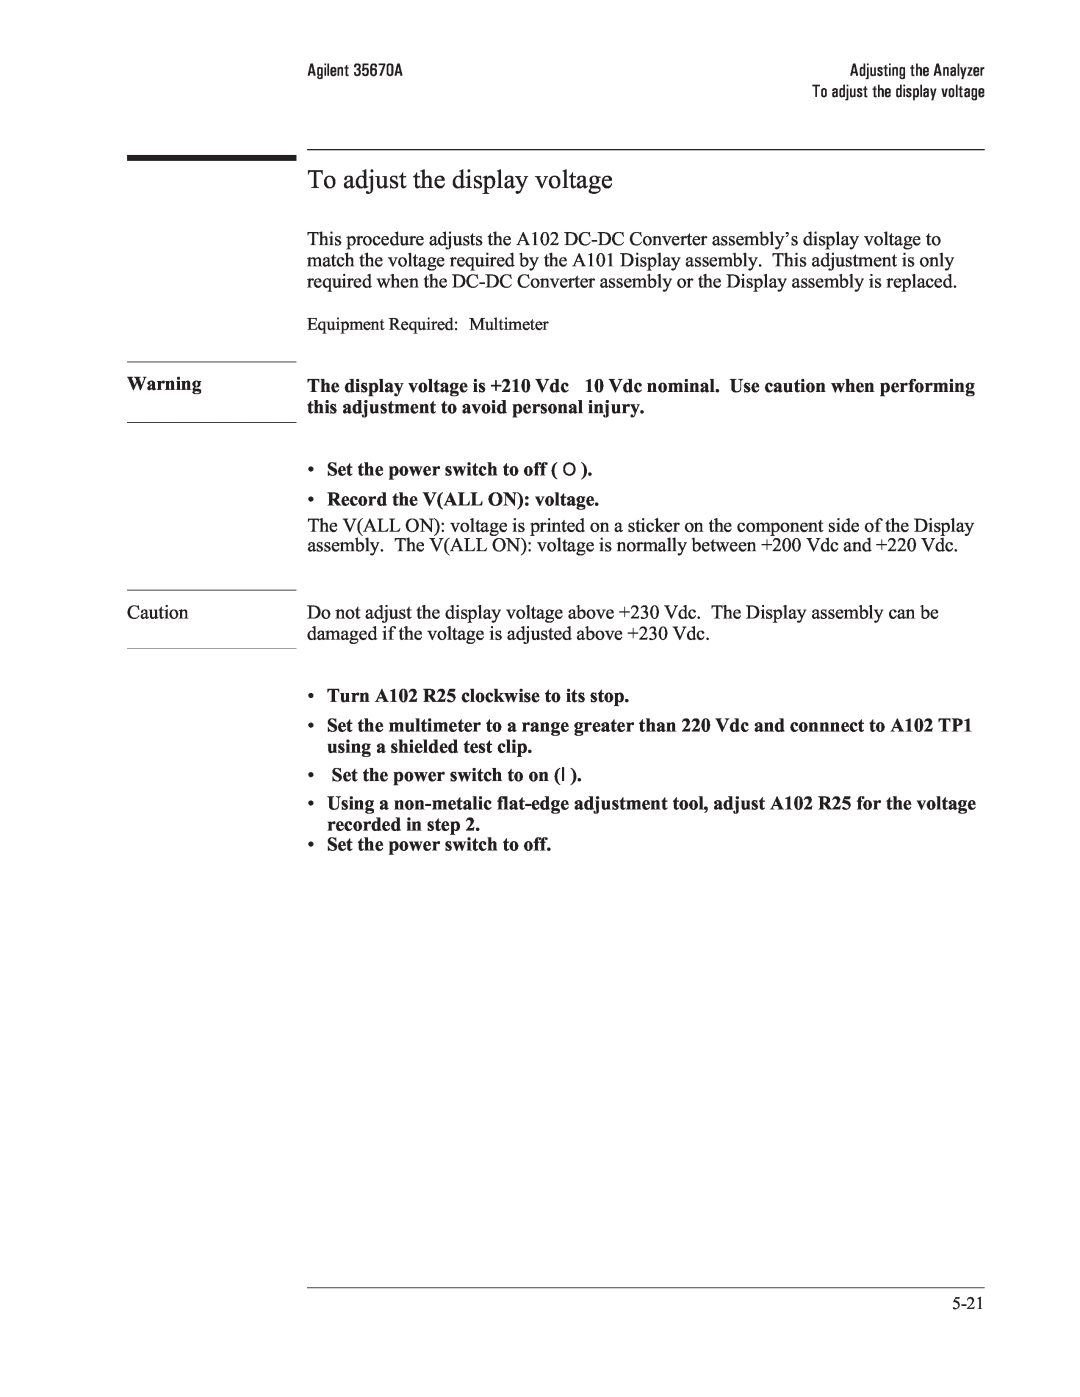 Agilent Technologies 35670-90066 manual To adjust the display voltage 